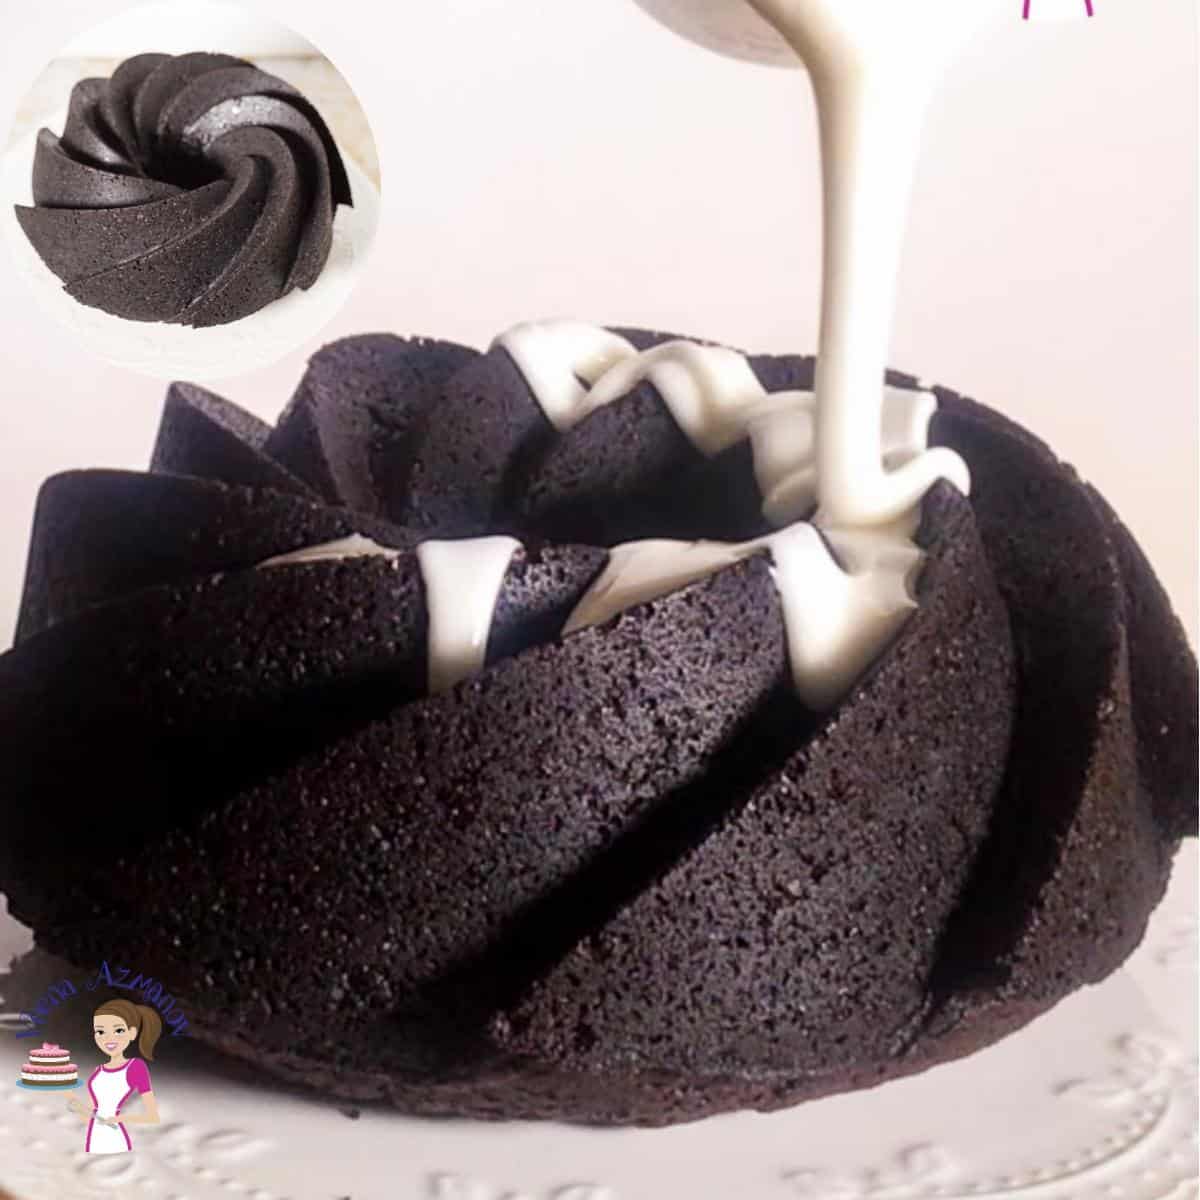 Mom’s Eggless Chocolate Cake